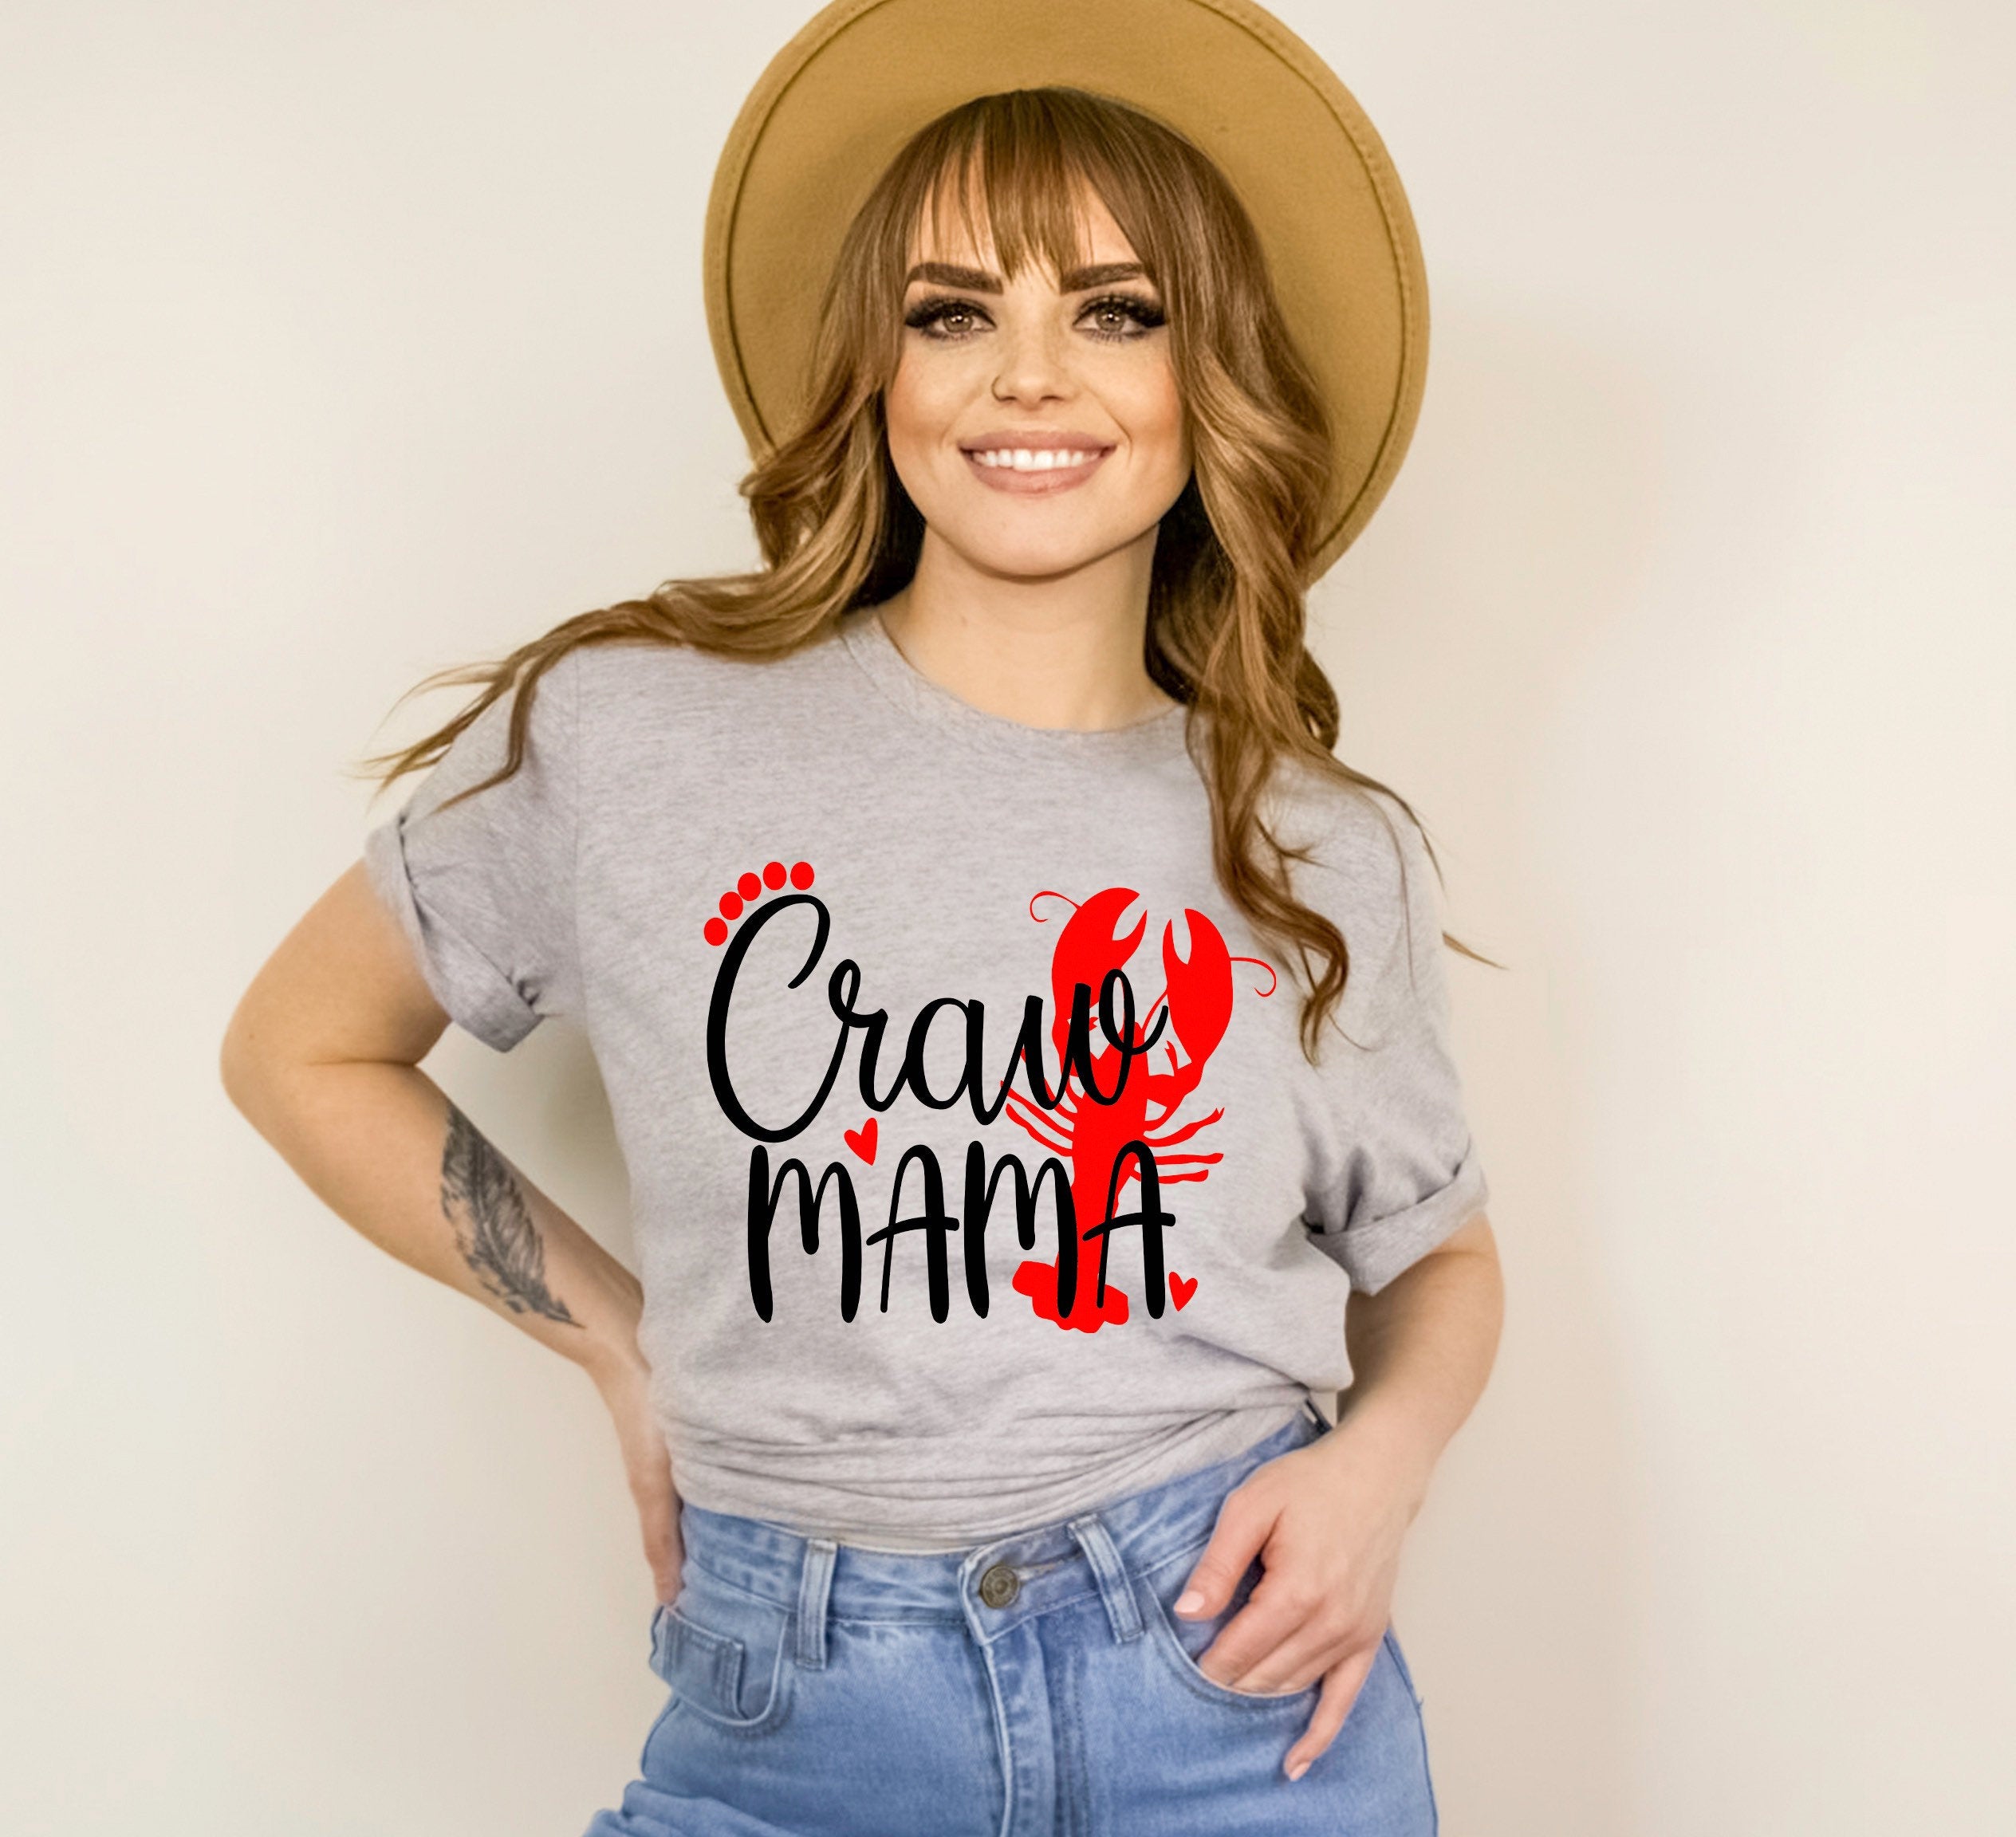 Crawfish Boil t-shirt | Unisex crawfish boil shirt | Craw Mama shirt | Beer and crawfish shirt | Cute maternity shirt